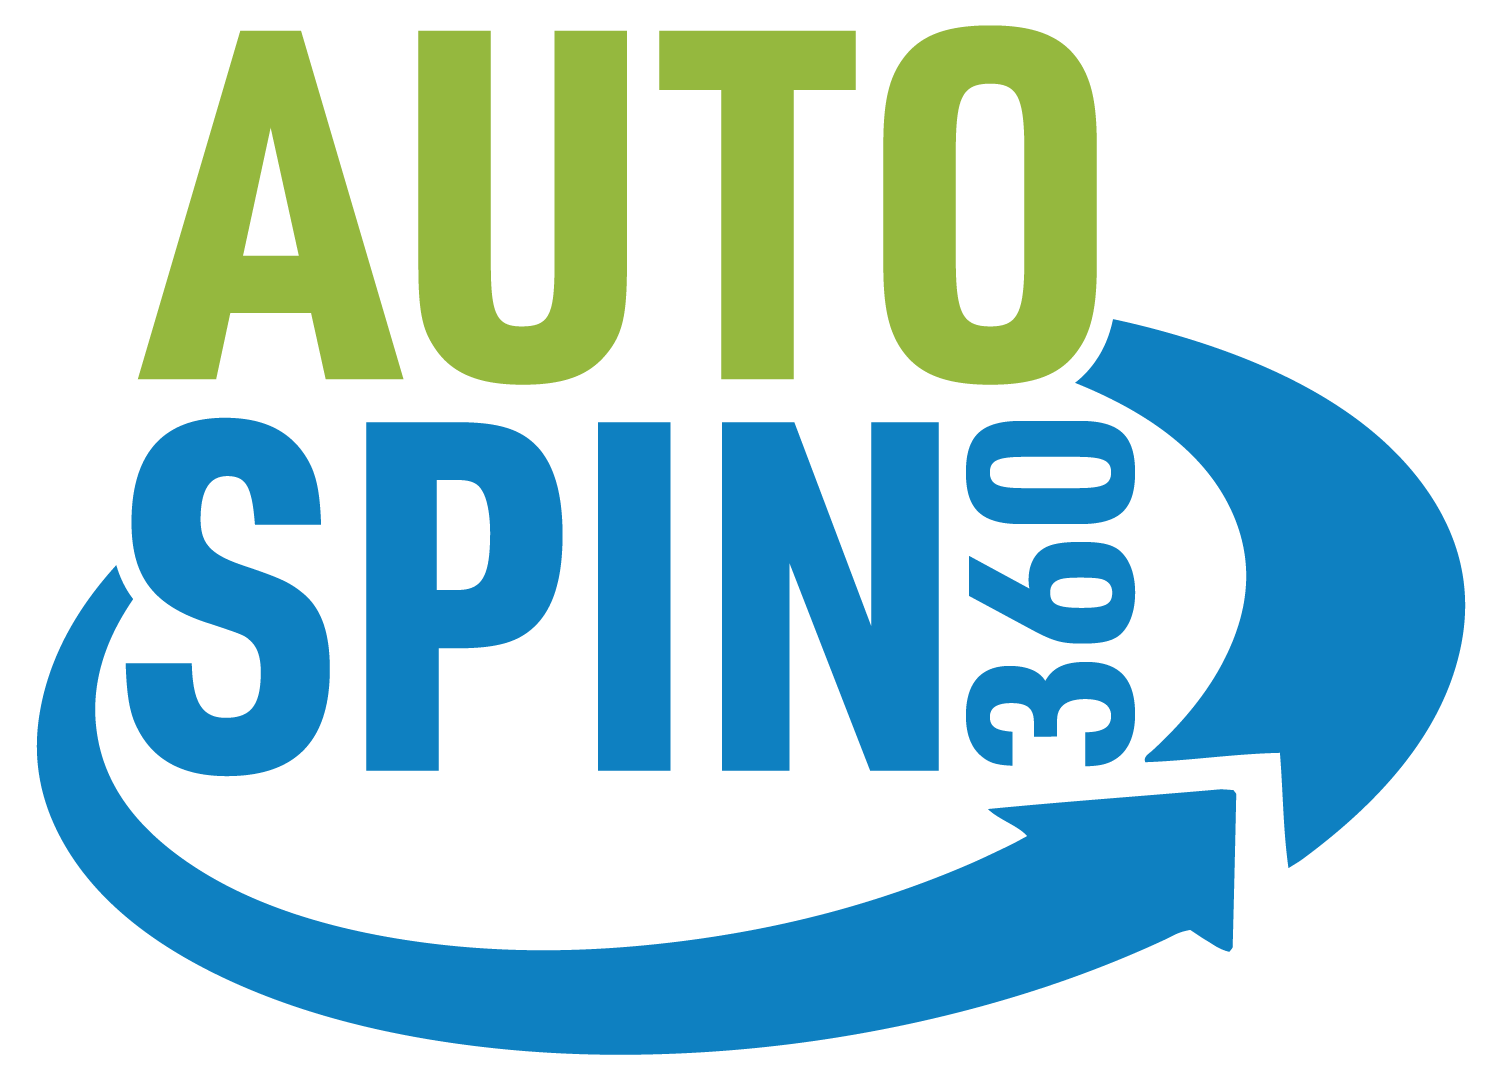 Auto Dealer 360 Degree Spins  Maker 360 by AutoUpLink Tech